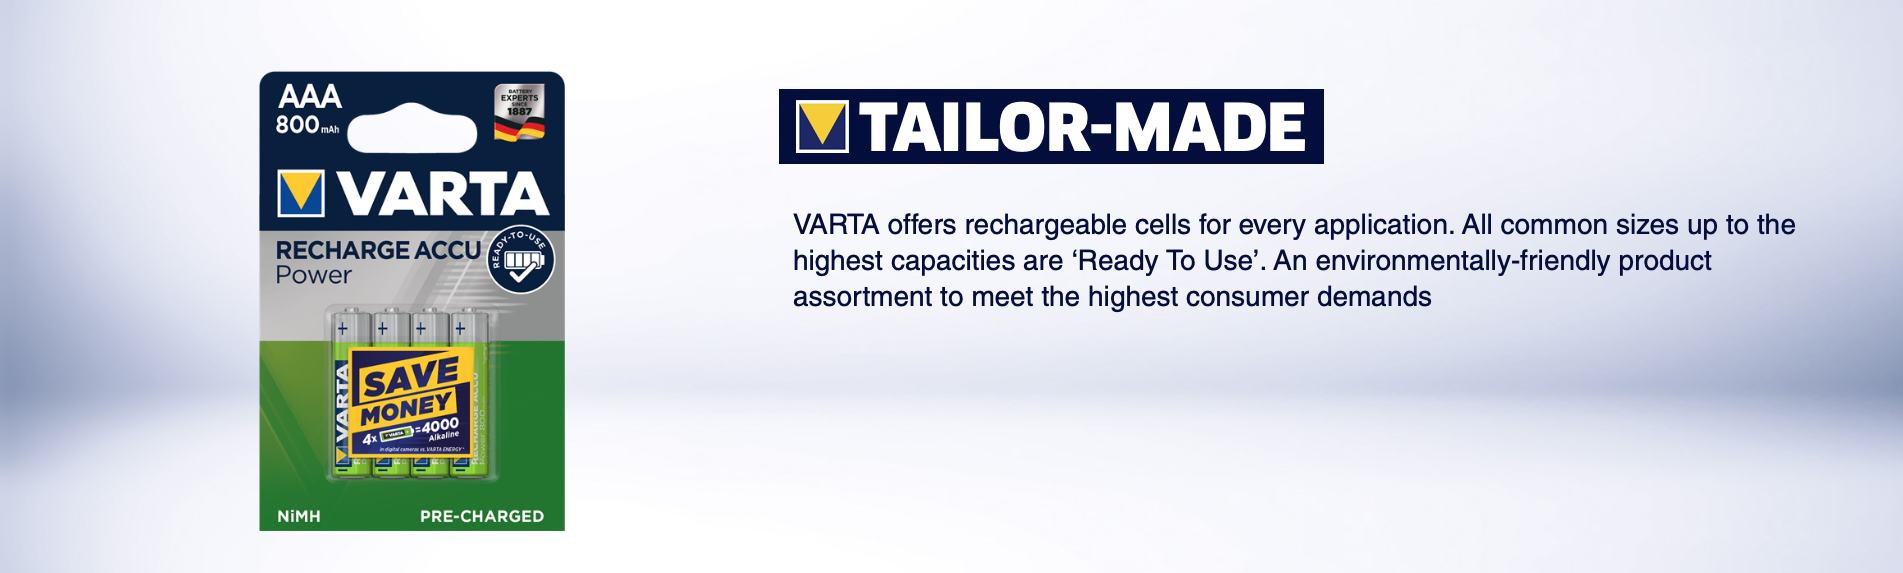 Varta Recharge Accu Power batteries AAA 1000 mAh Ready To Use 4